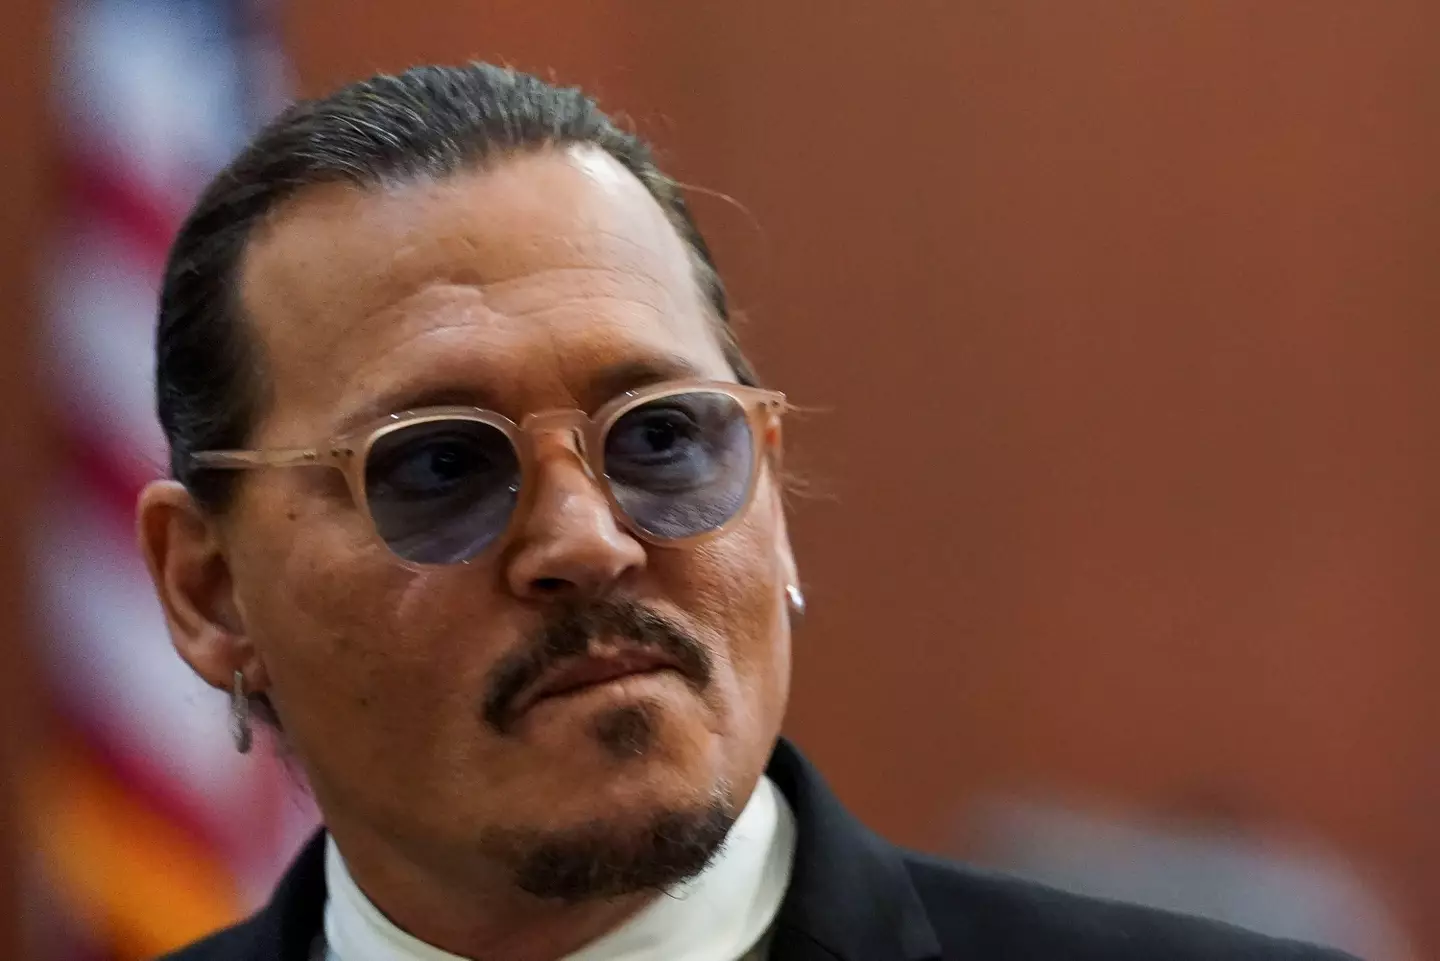 Depp is suing Heard for $50 million.